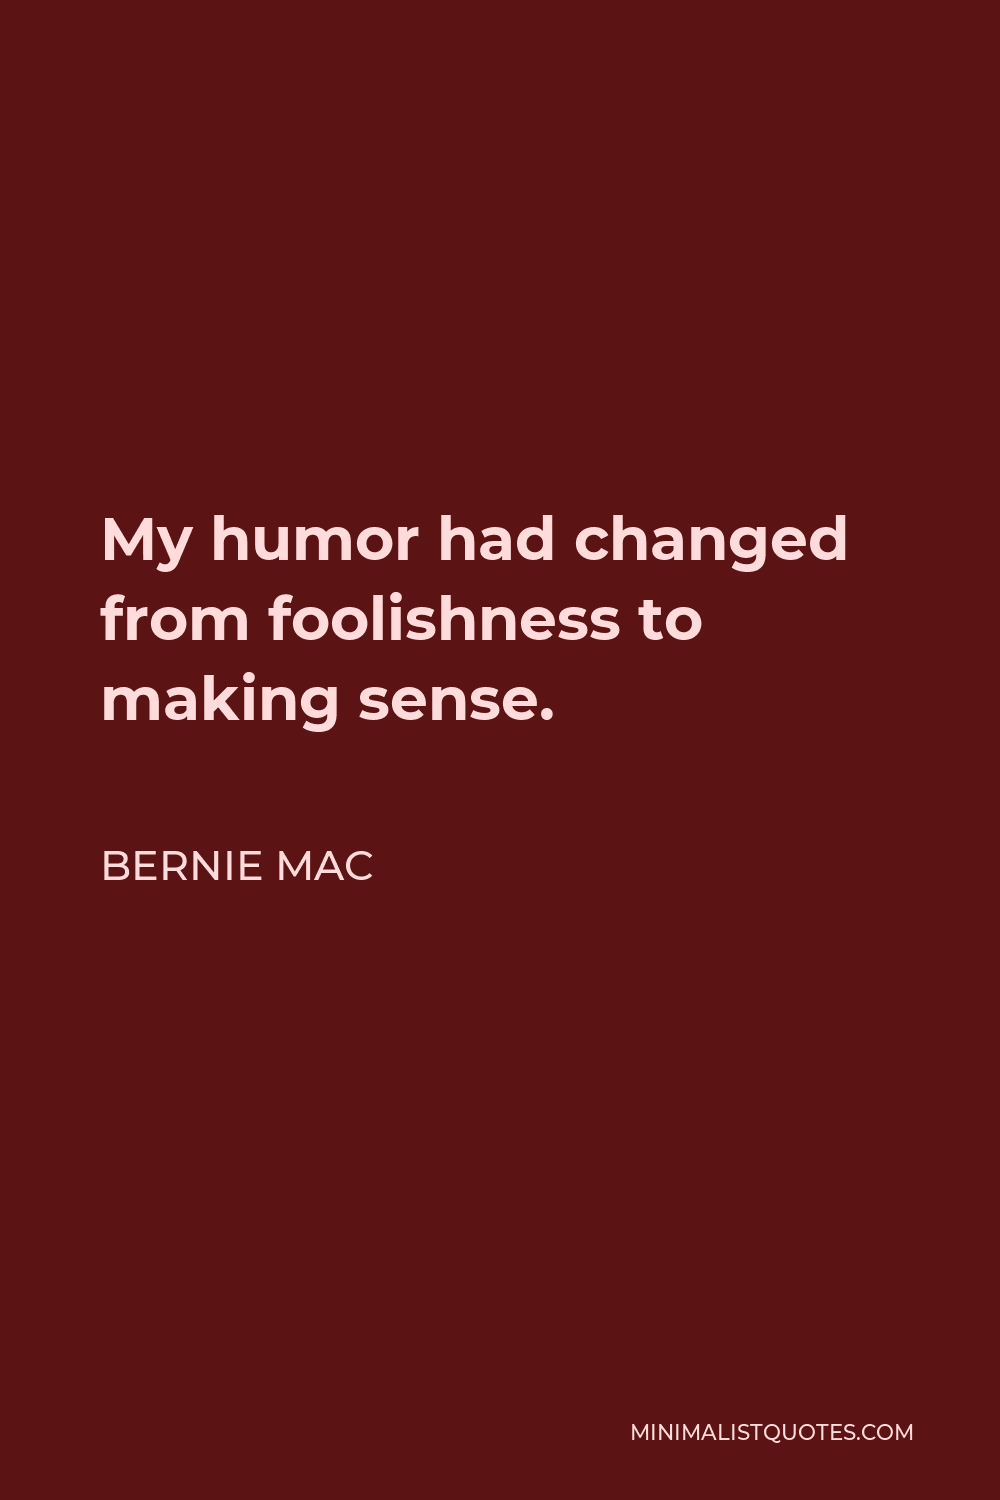 Bernie Mac Quote - My humor had changed from foolishness to making sense.